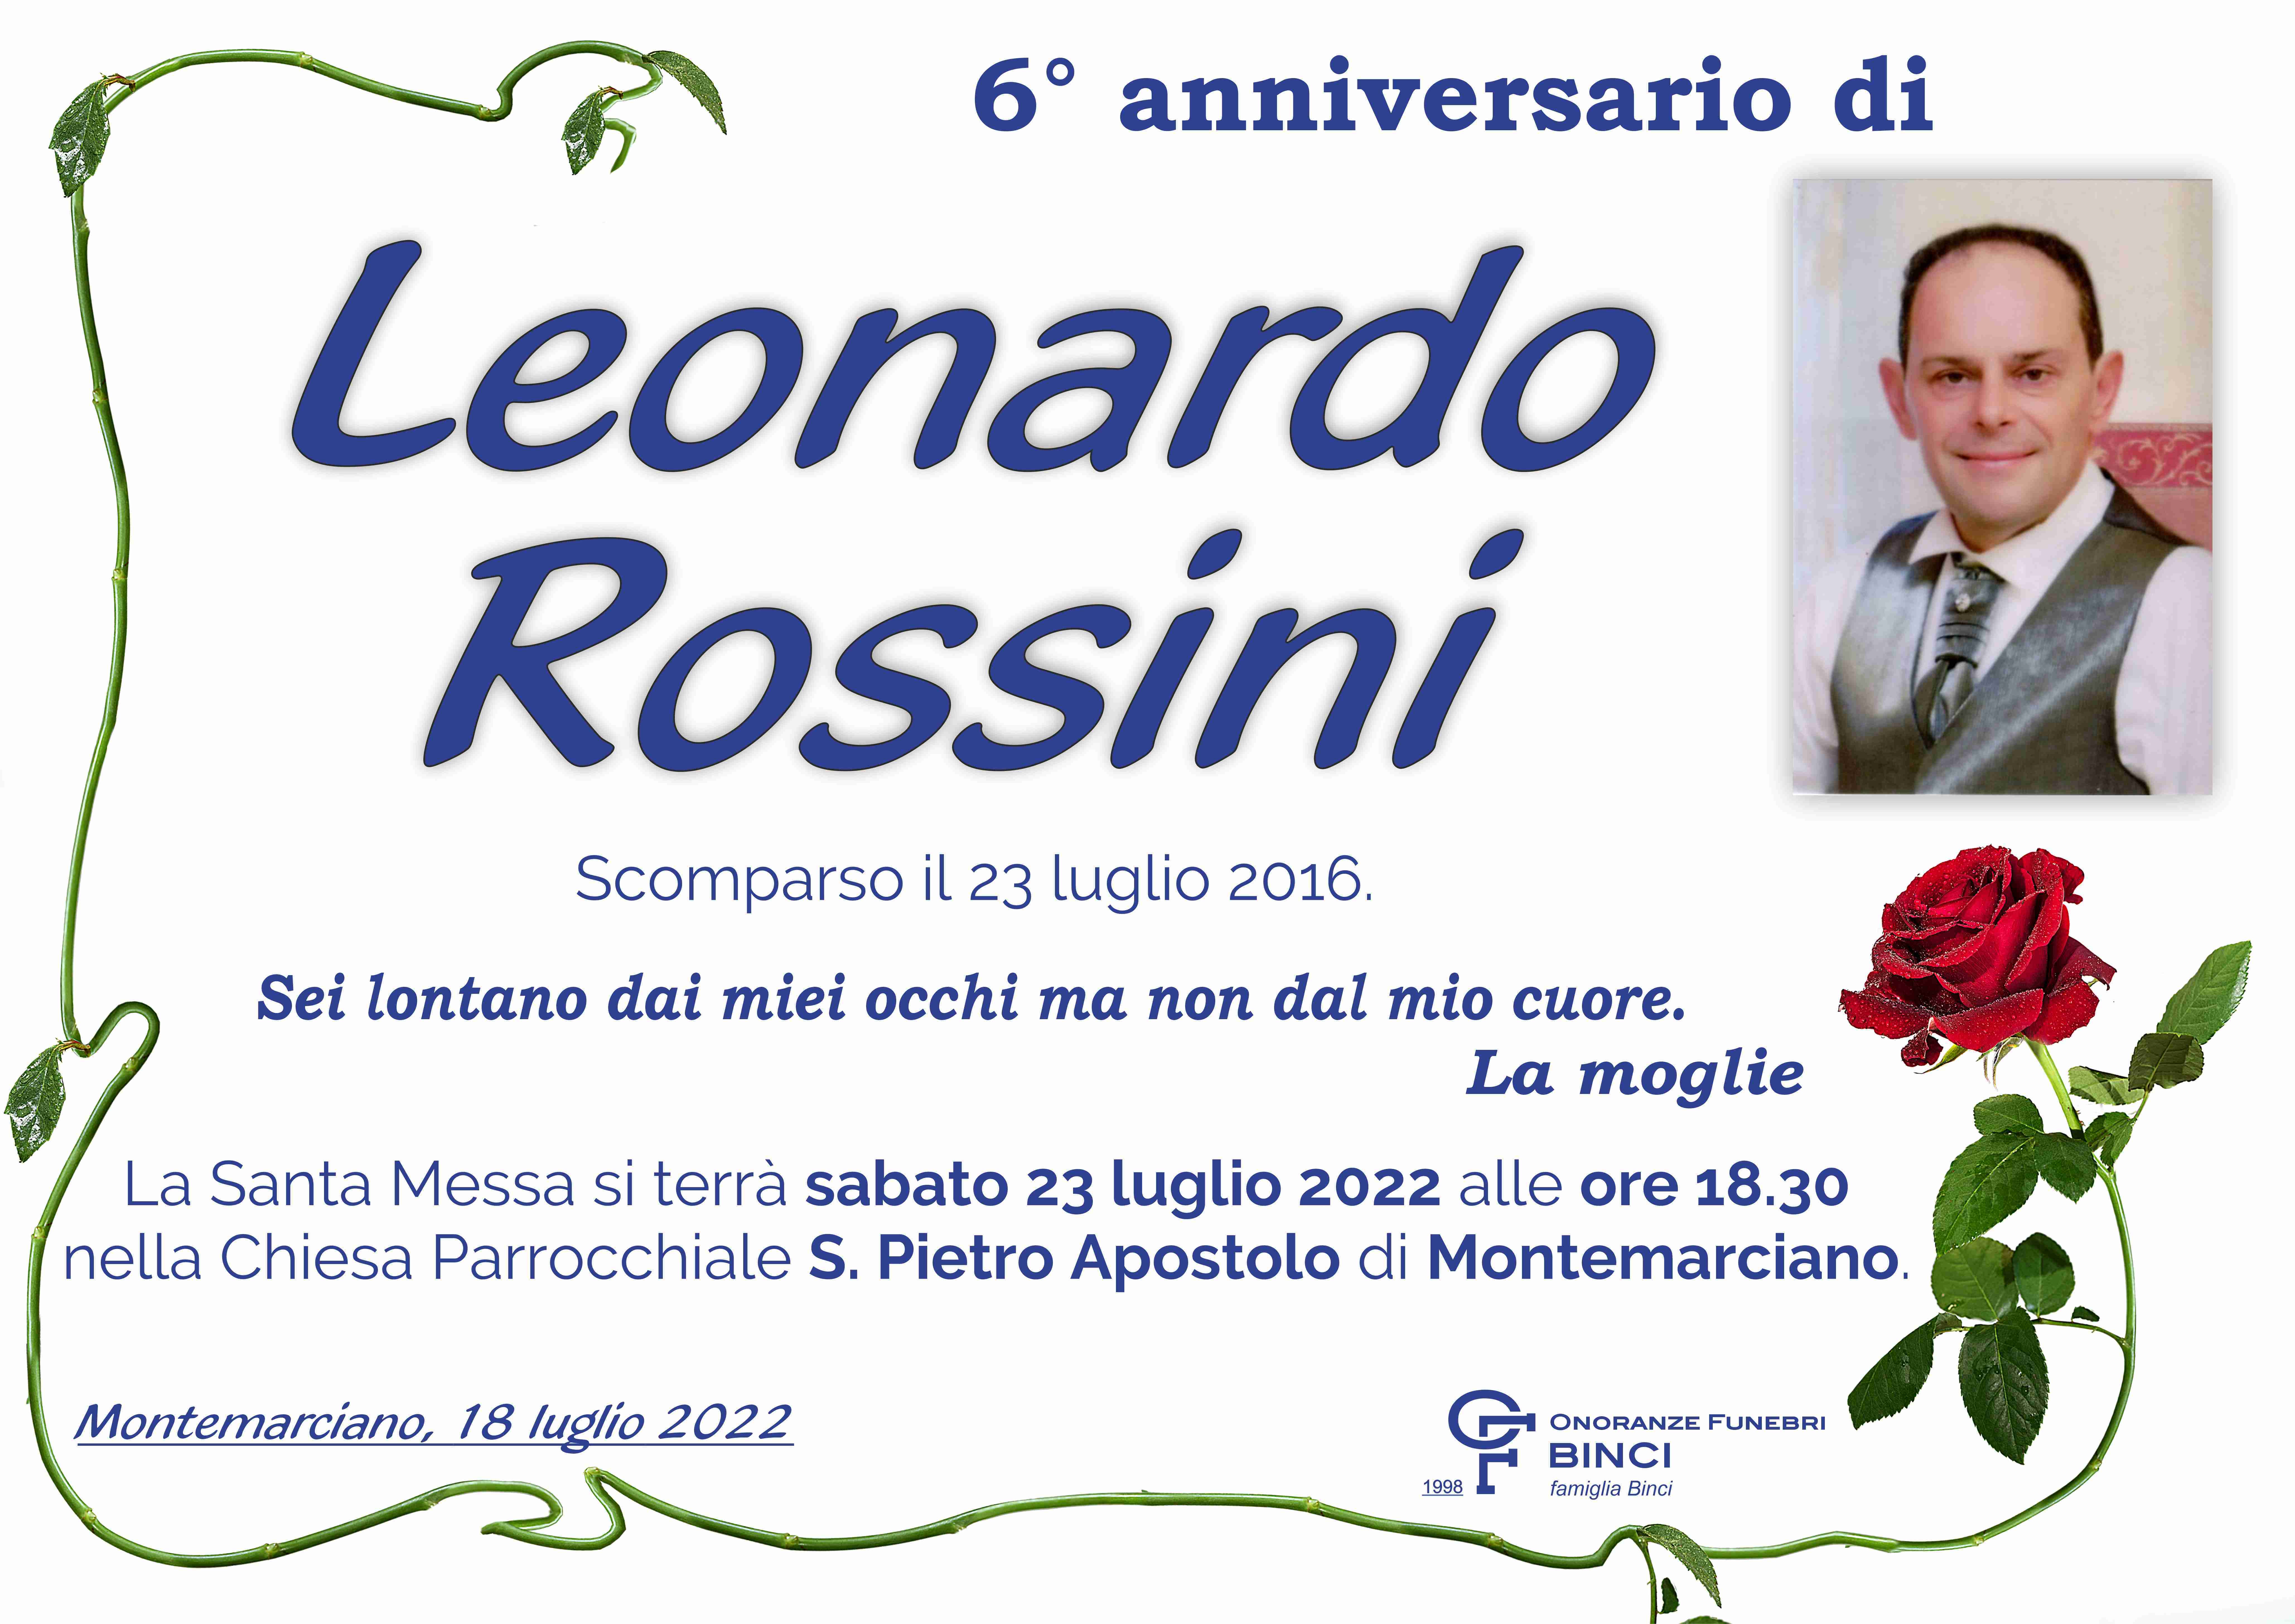 Leonardo Rossini